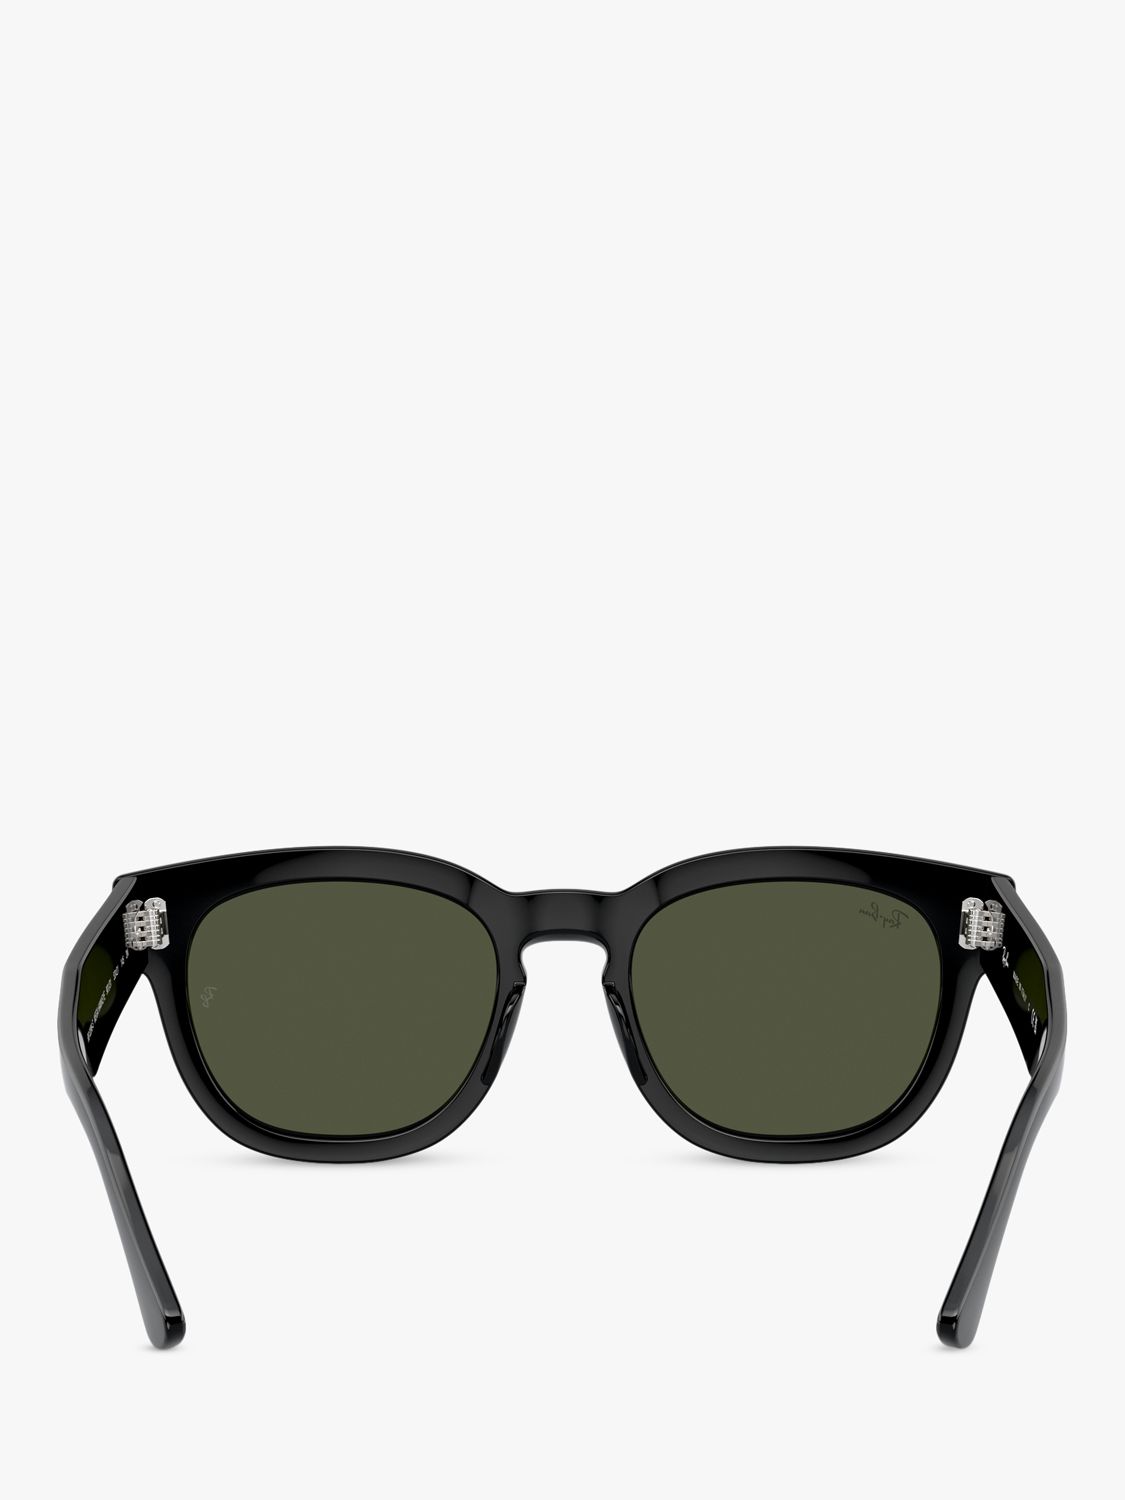 Ray-Ban RB0298S Unisex Mega Hawkeye Sunglasses, Black